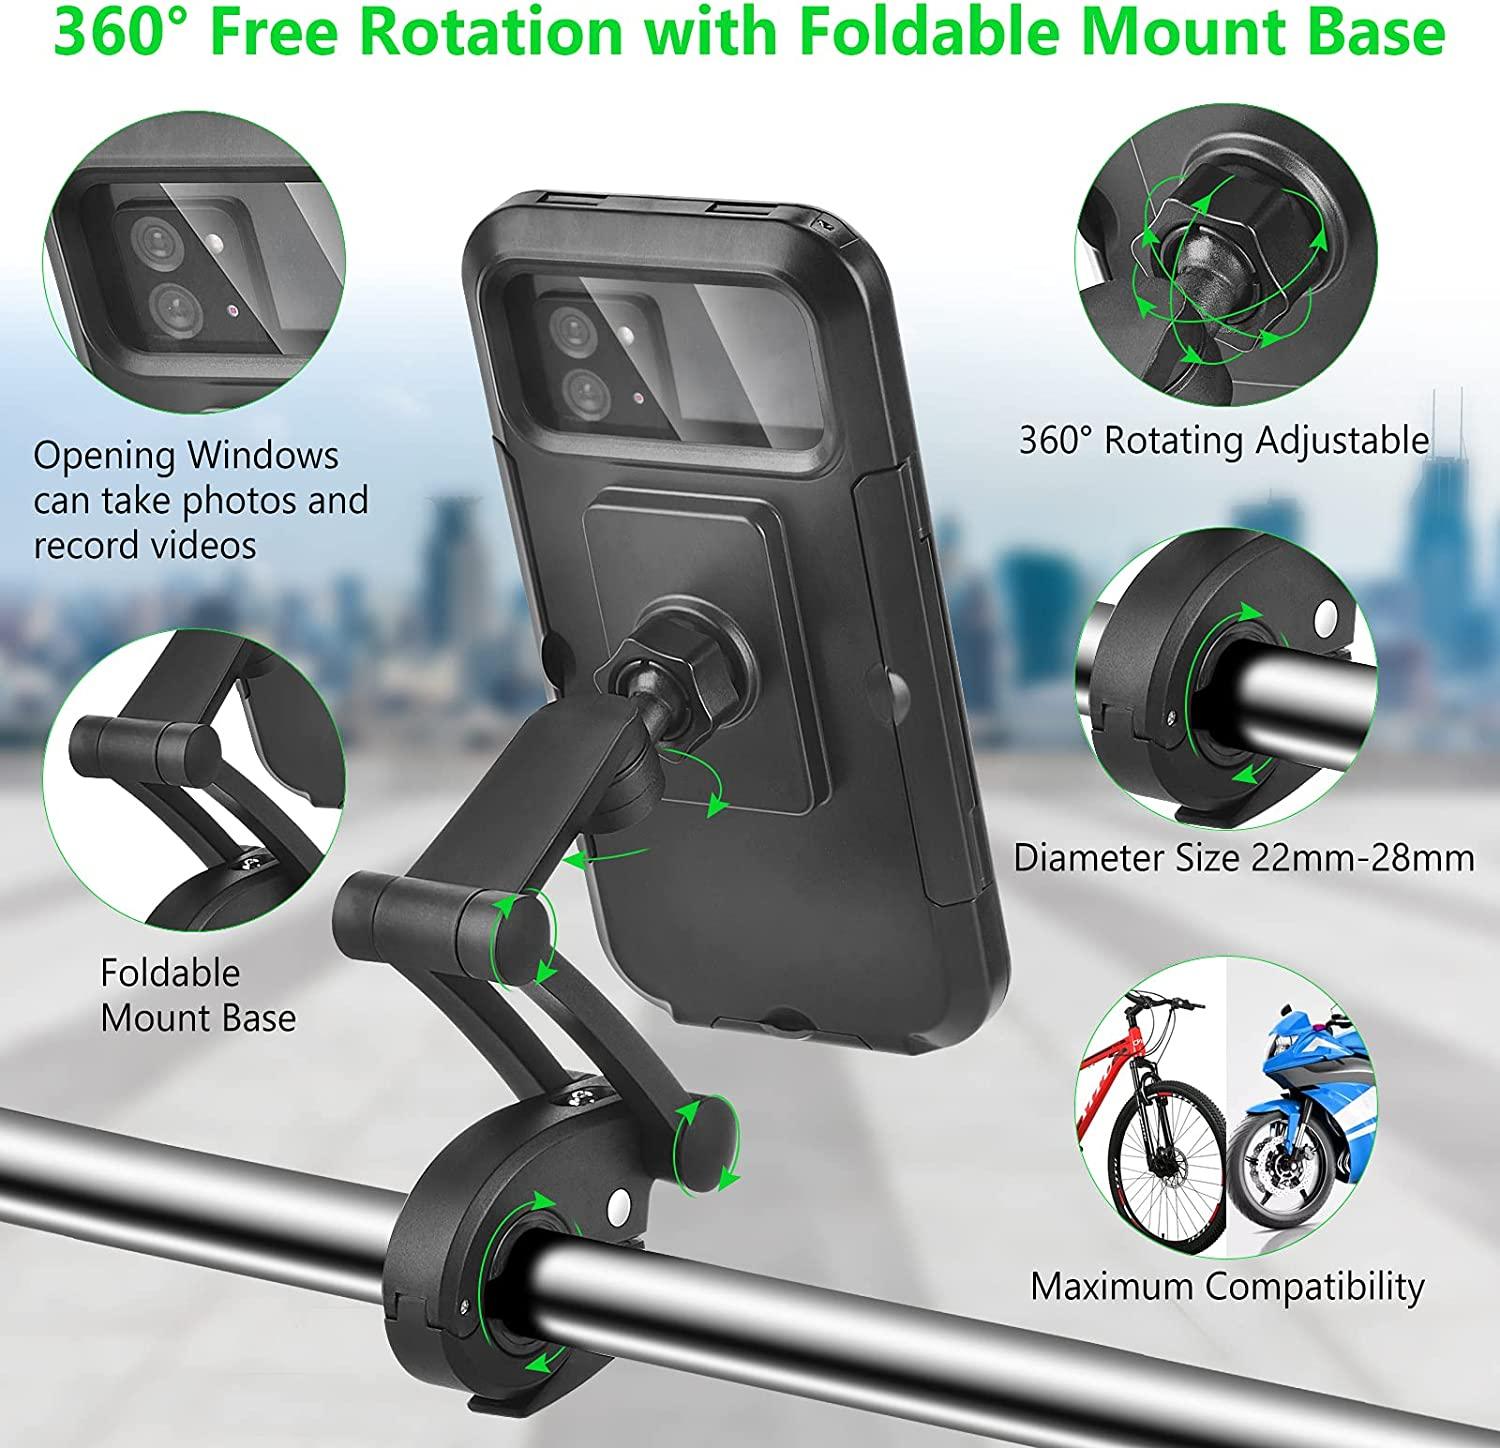 Adjustable Waterproof Bicycle Mobile Phone Holder Mount Universal Bike Motorcycle Handlebar Cell Phone Support Mount Bracket Bag - KinglyDay